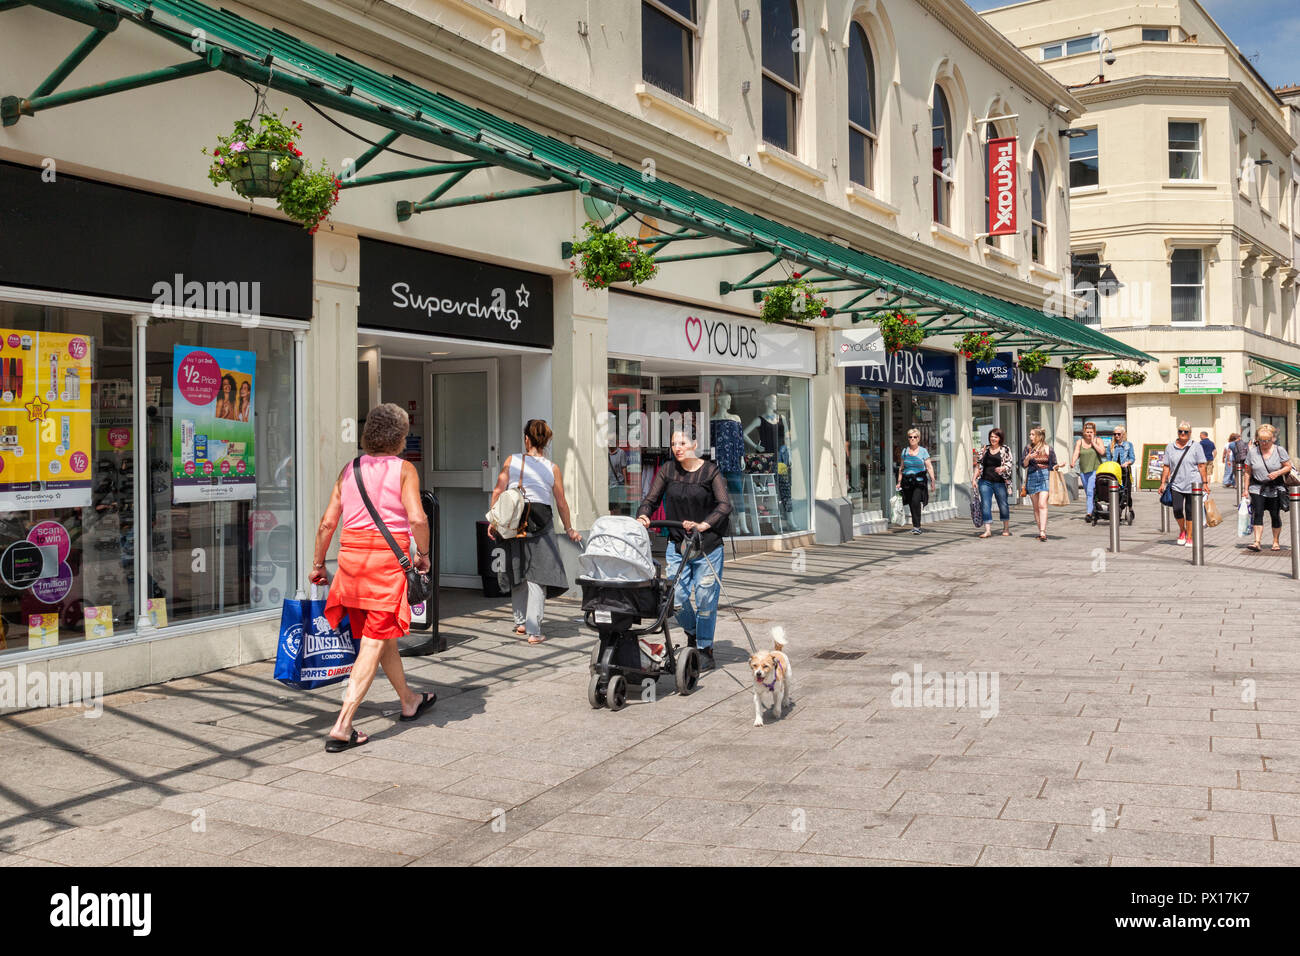 1 May 2018: Torquay, Devon, UK - Shopping in Fleet Street, on a warm spring day. Stock Photo